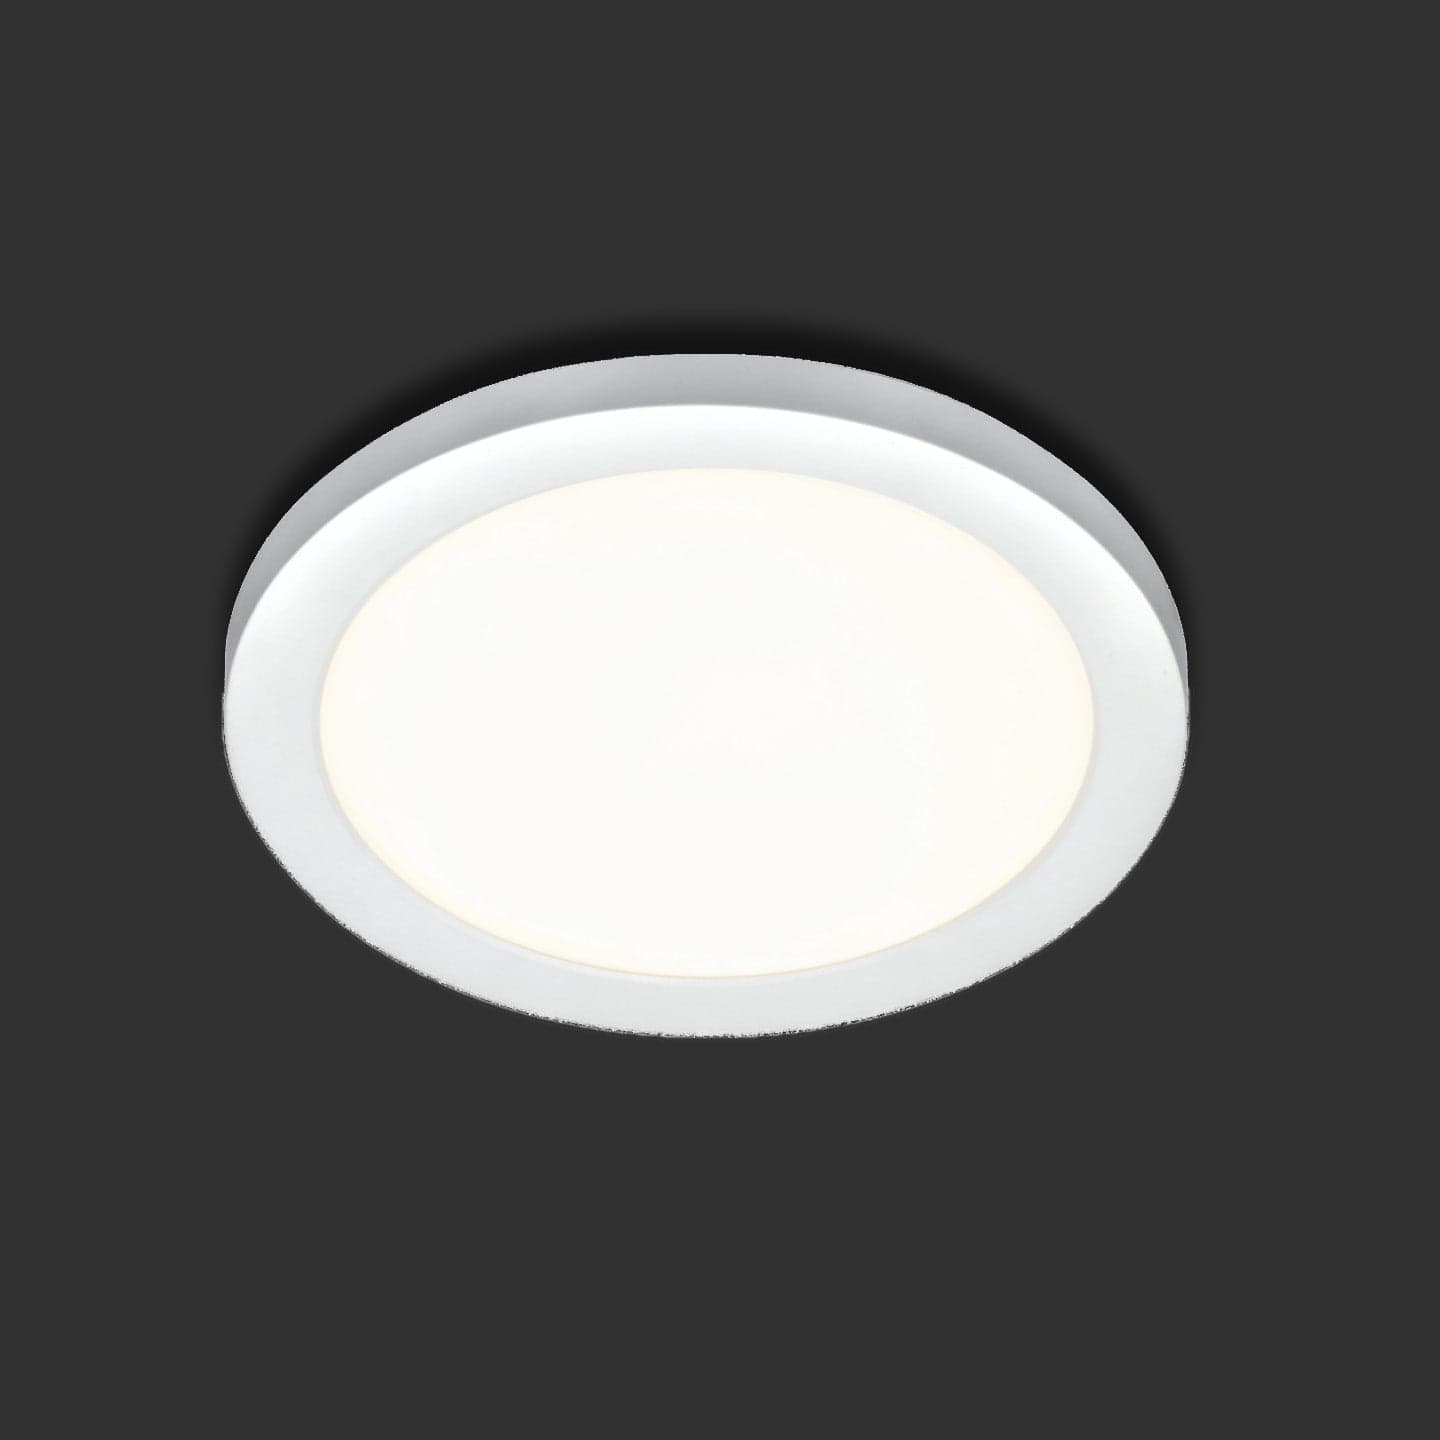 Lights  -  Forum Spa White Tauri 18W Led Flush Bathroom Light  -  50155596